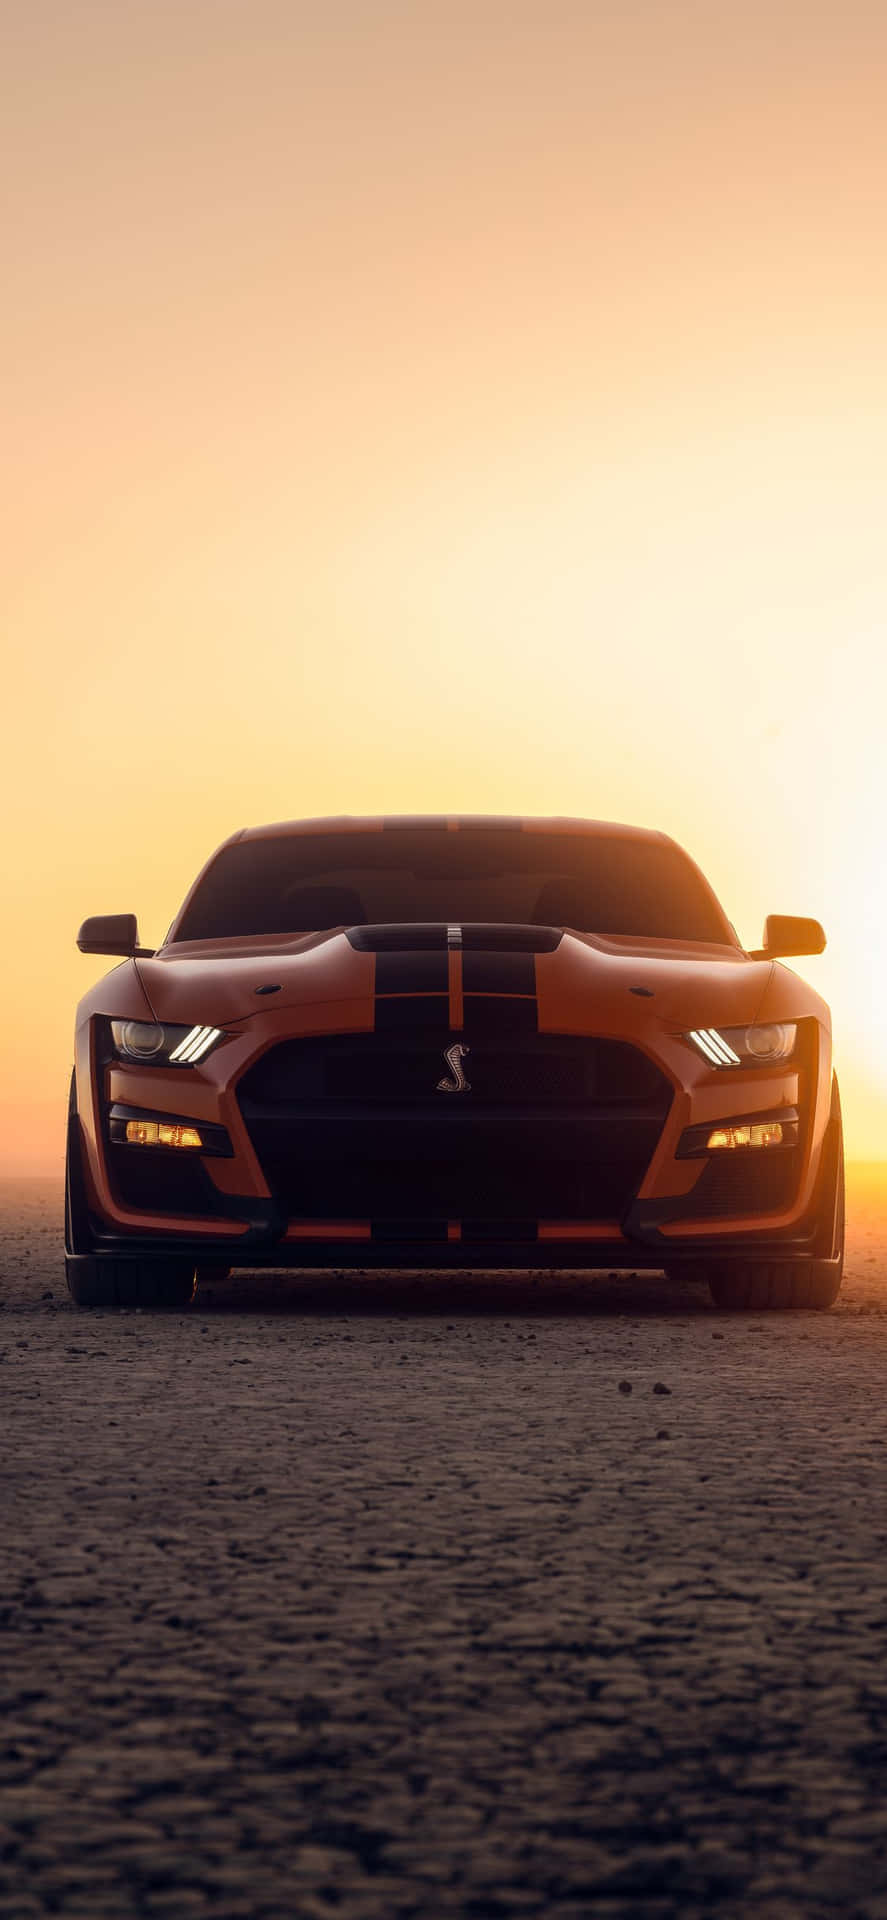 Et Ford Mustang GT sidder i ørkenen ved solnedgang Wallpaper